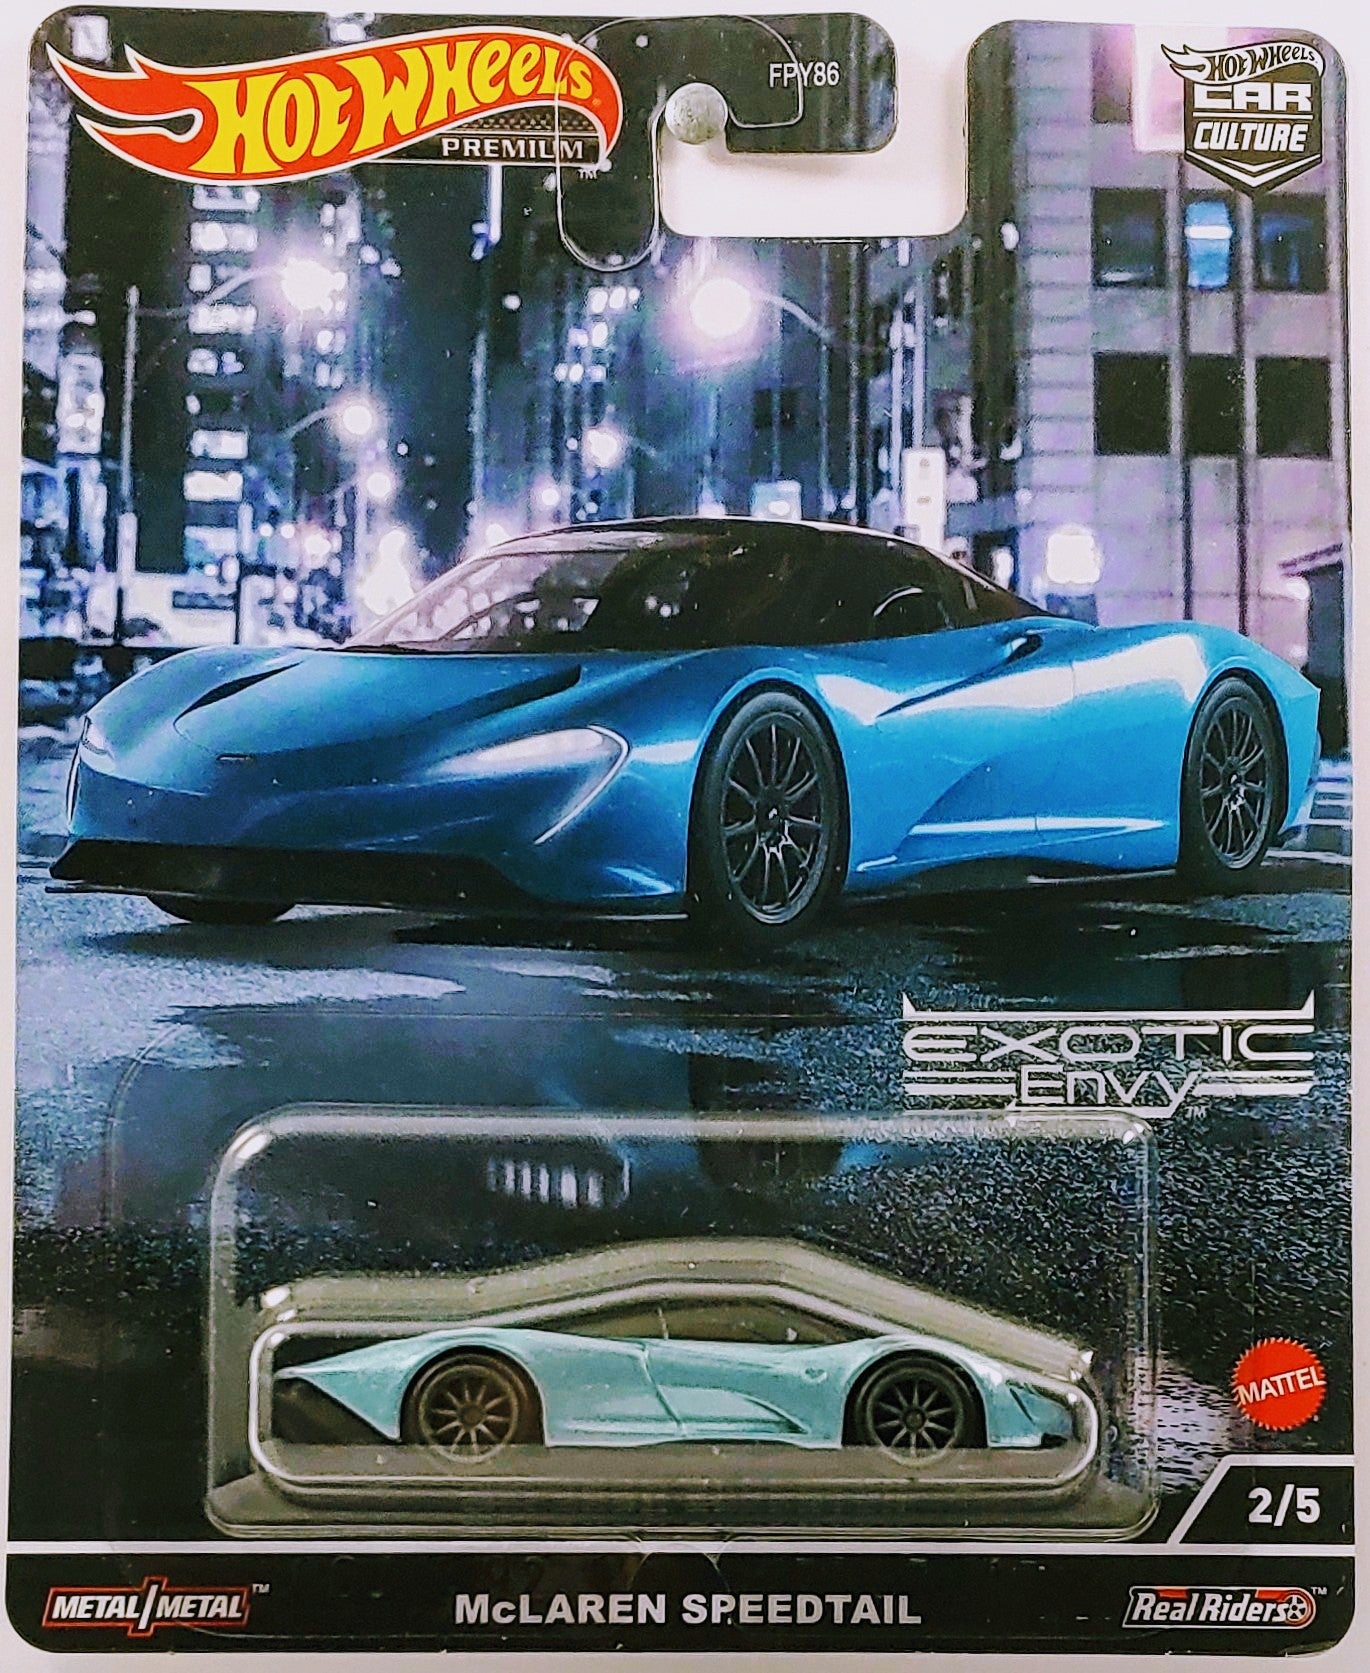 Hot Wheels 2022 -Premium / Car Culture / Exotic Envy 2/5 - McLaren Speedtail - Metallic Blue - Metal/Metal & Real Riders